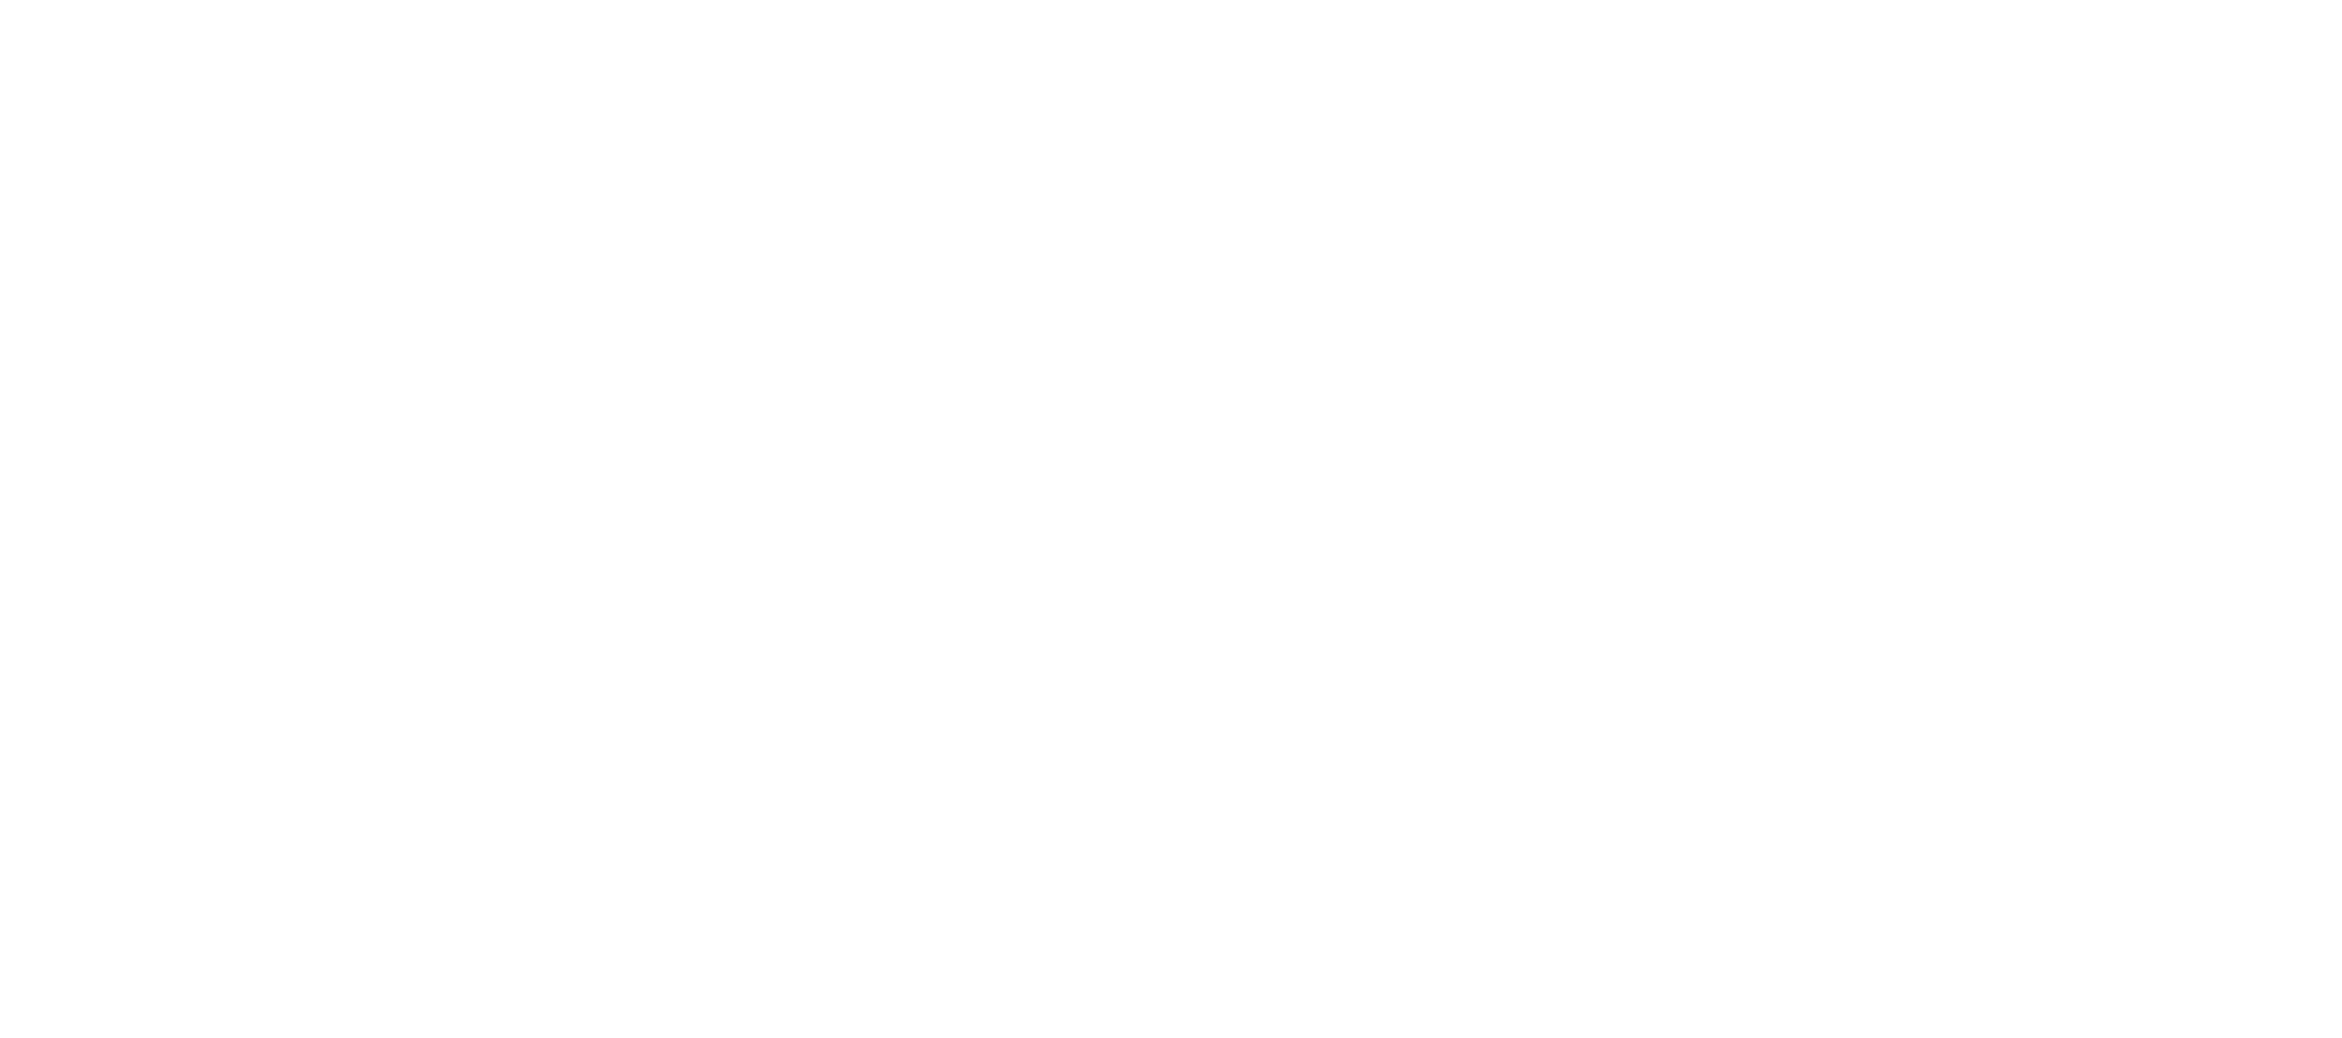 1280px-Amazon_Web_Services_Logo.svg